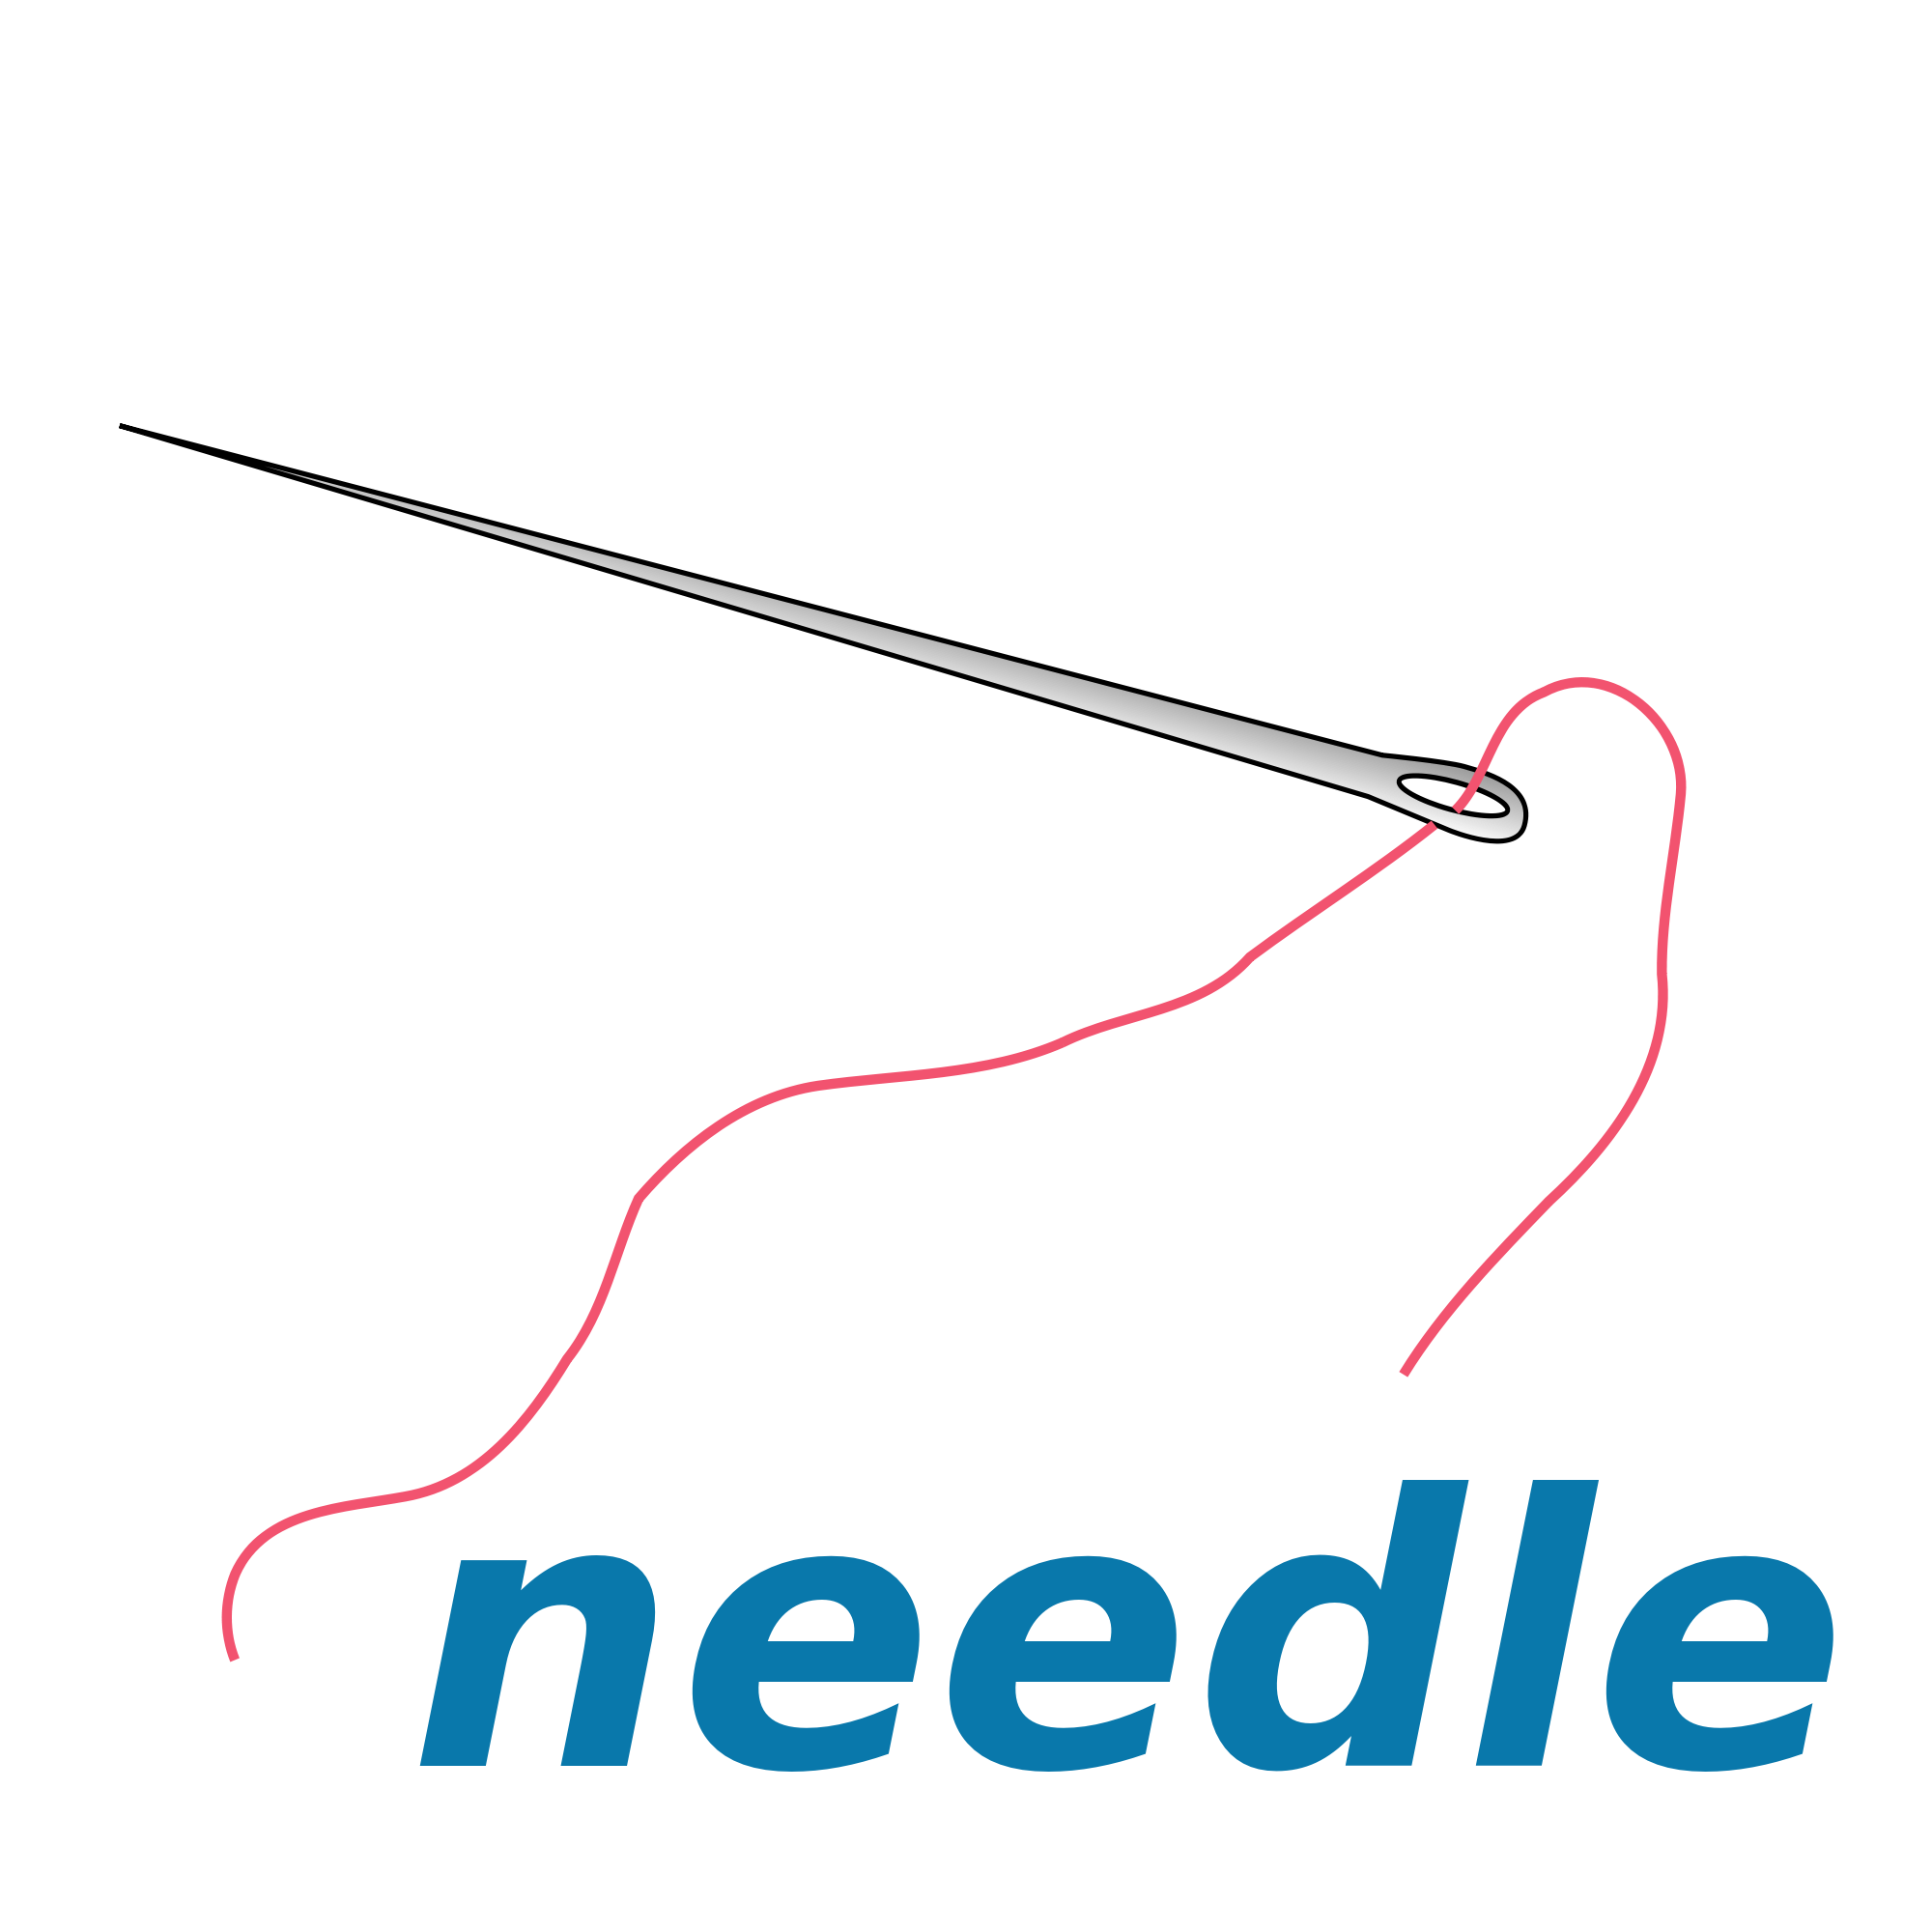 Needle svg